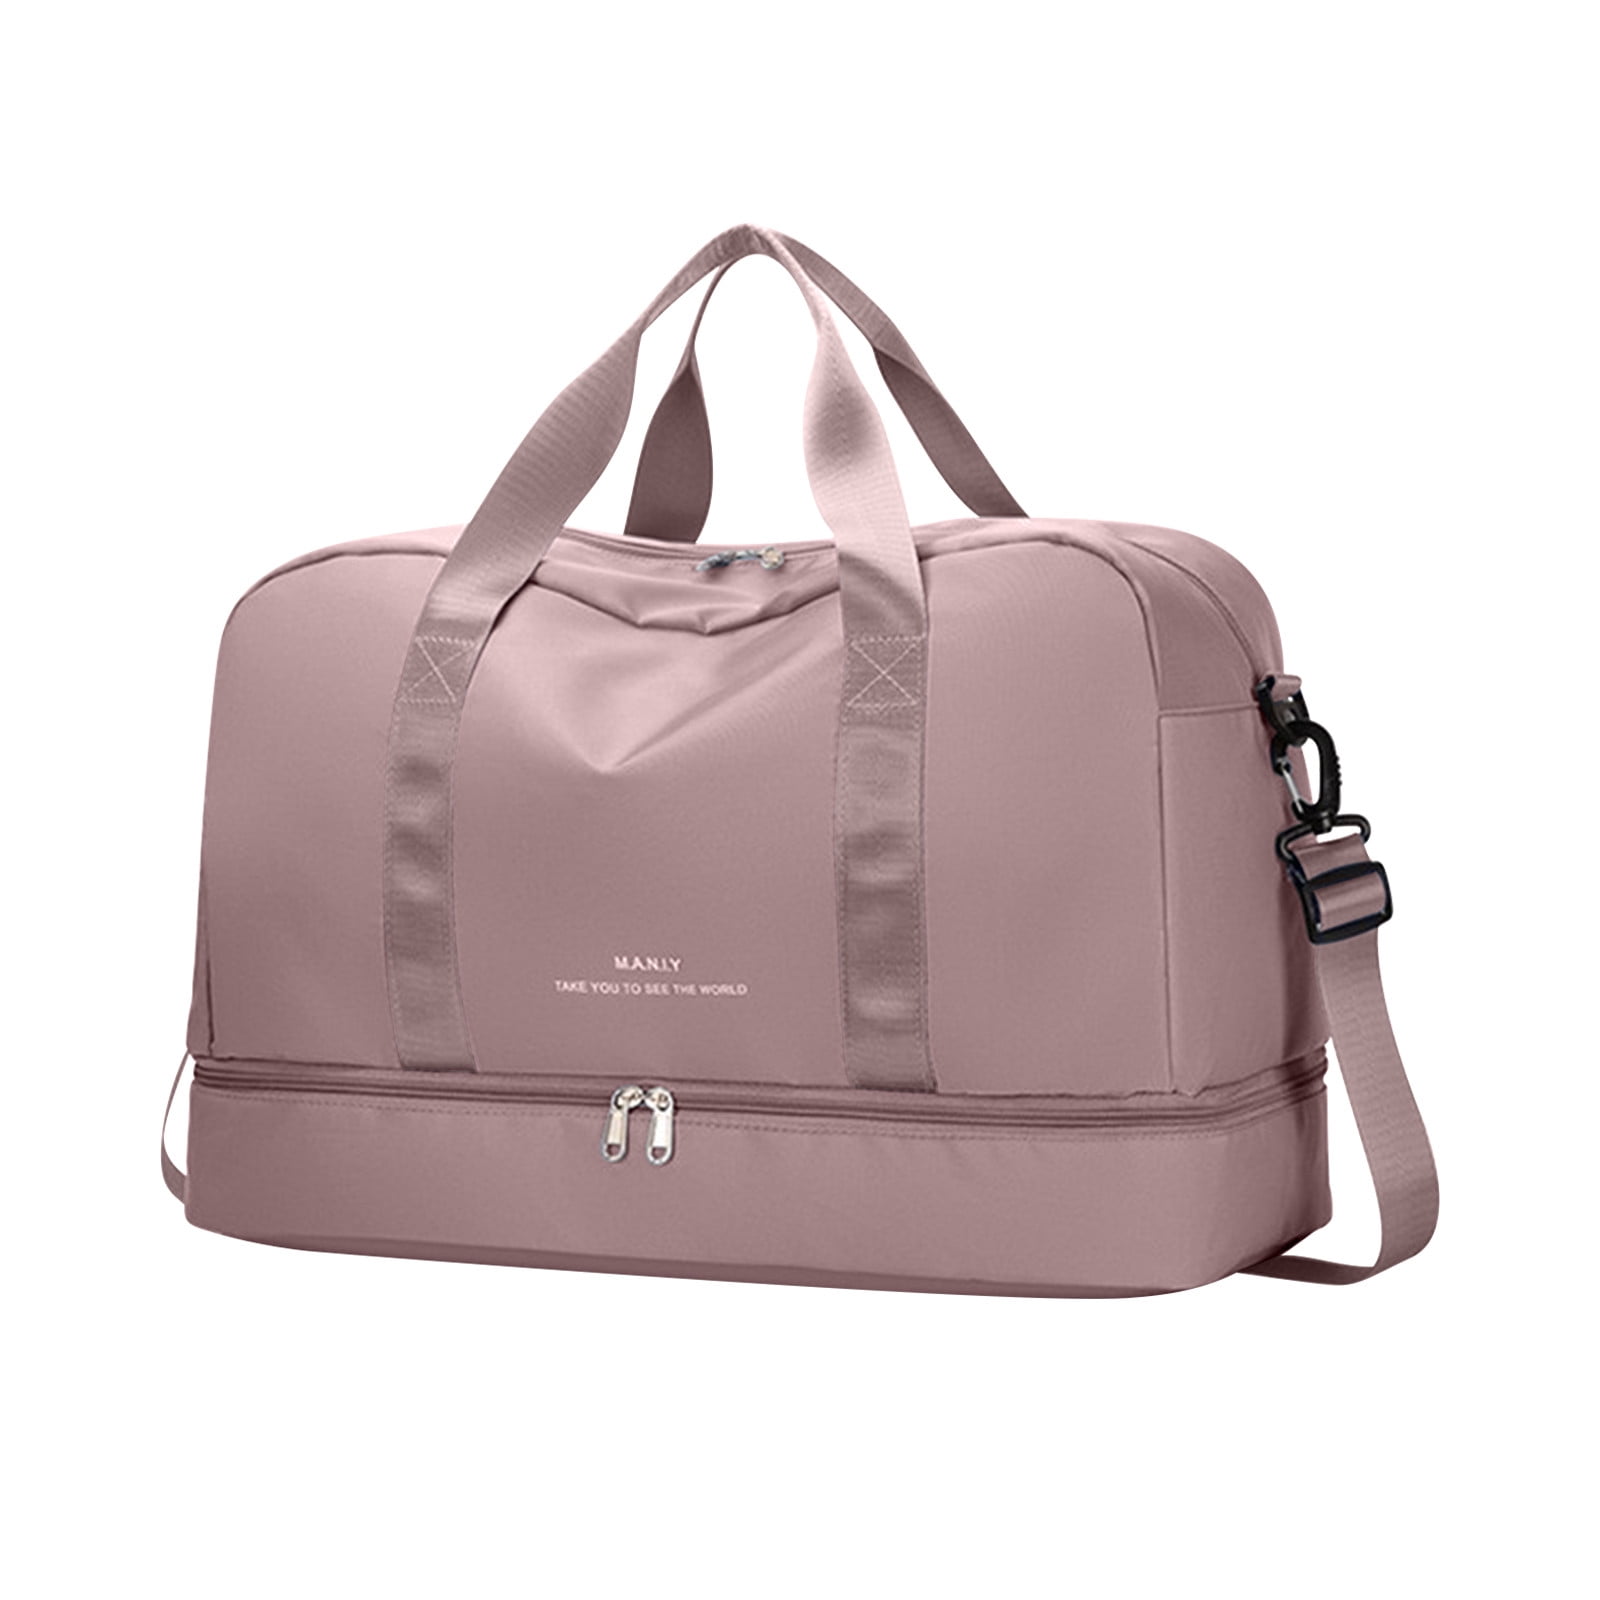 LWITHSZG Weekender Duffel Bags for Women Men, Travel Totes Bag for ...